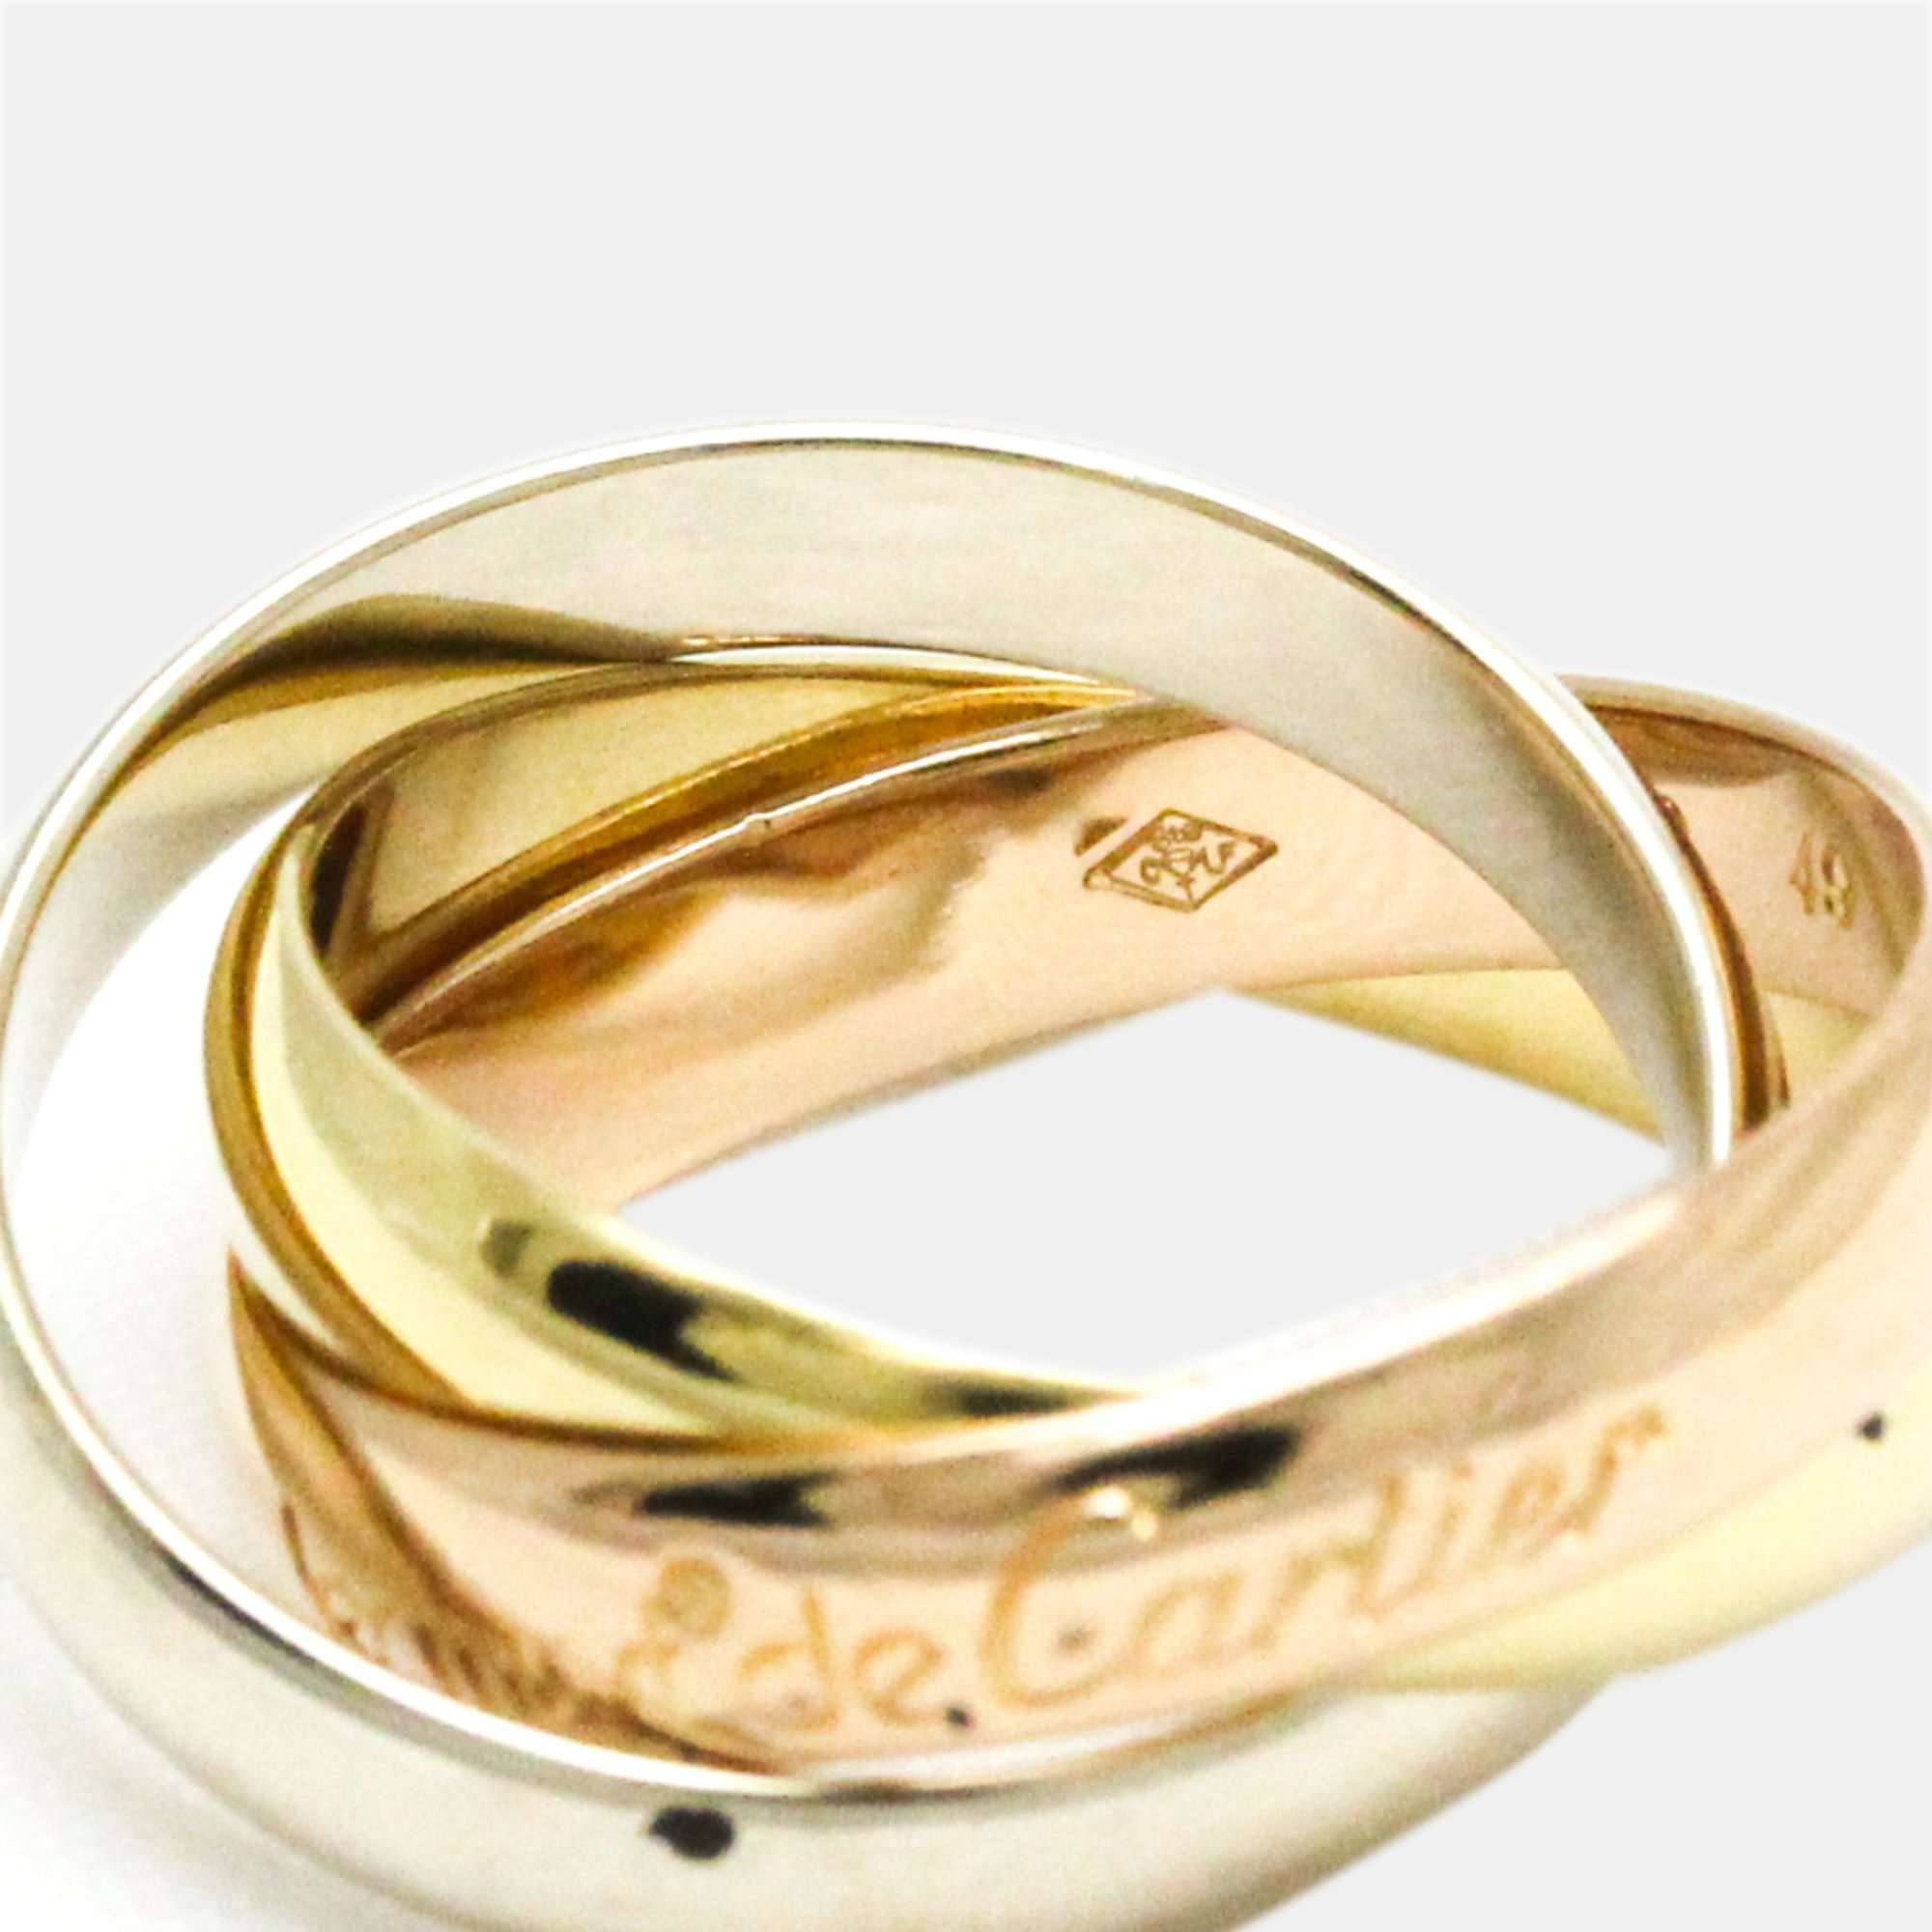 Cartier Les Must De Cartier 18K Yellow Rose And White Gold Ring EU 49